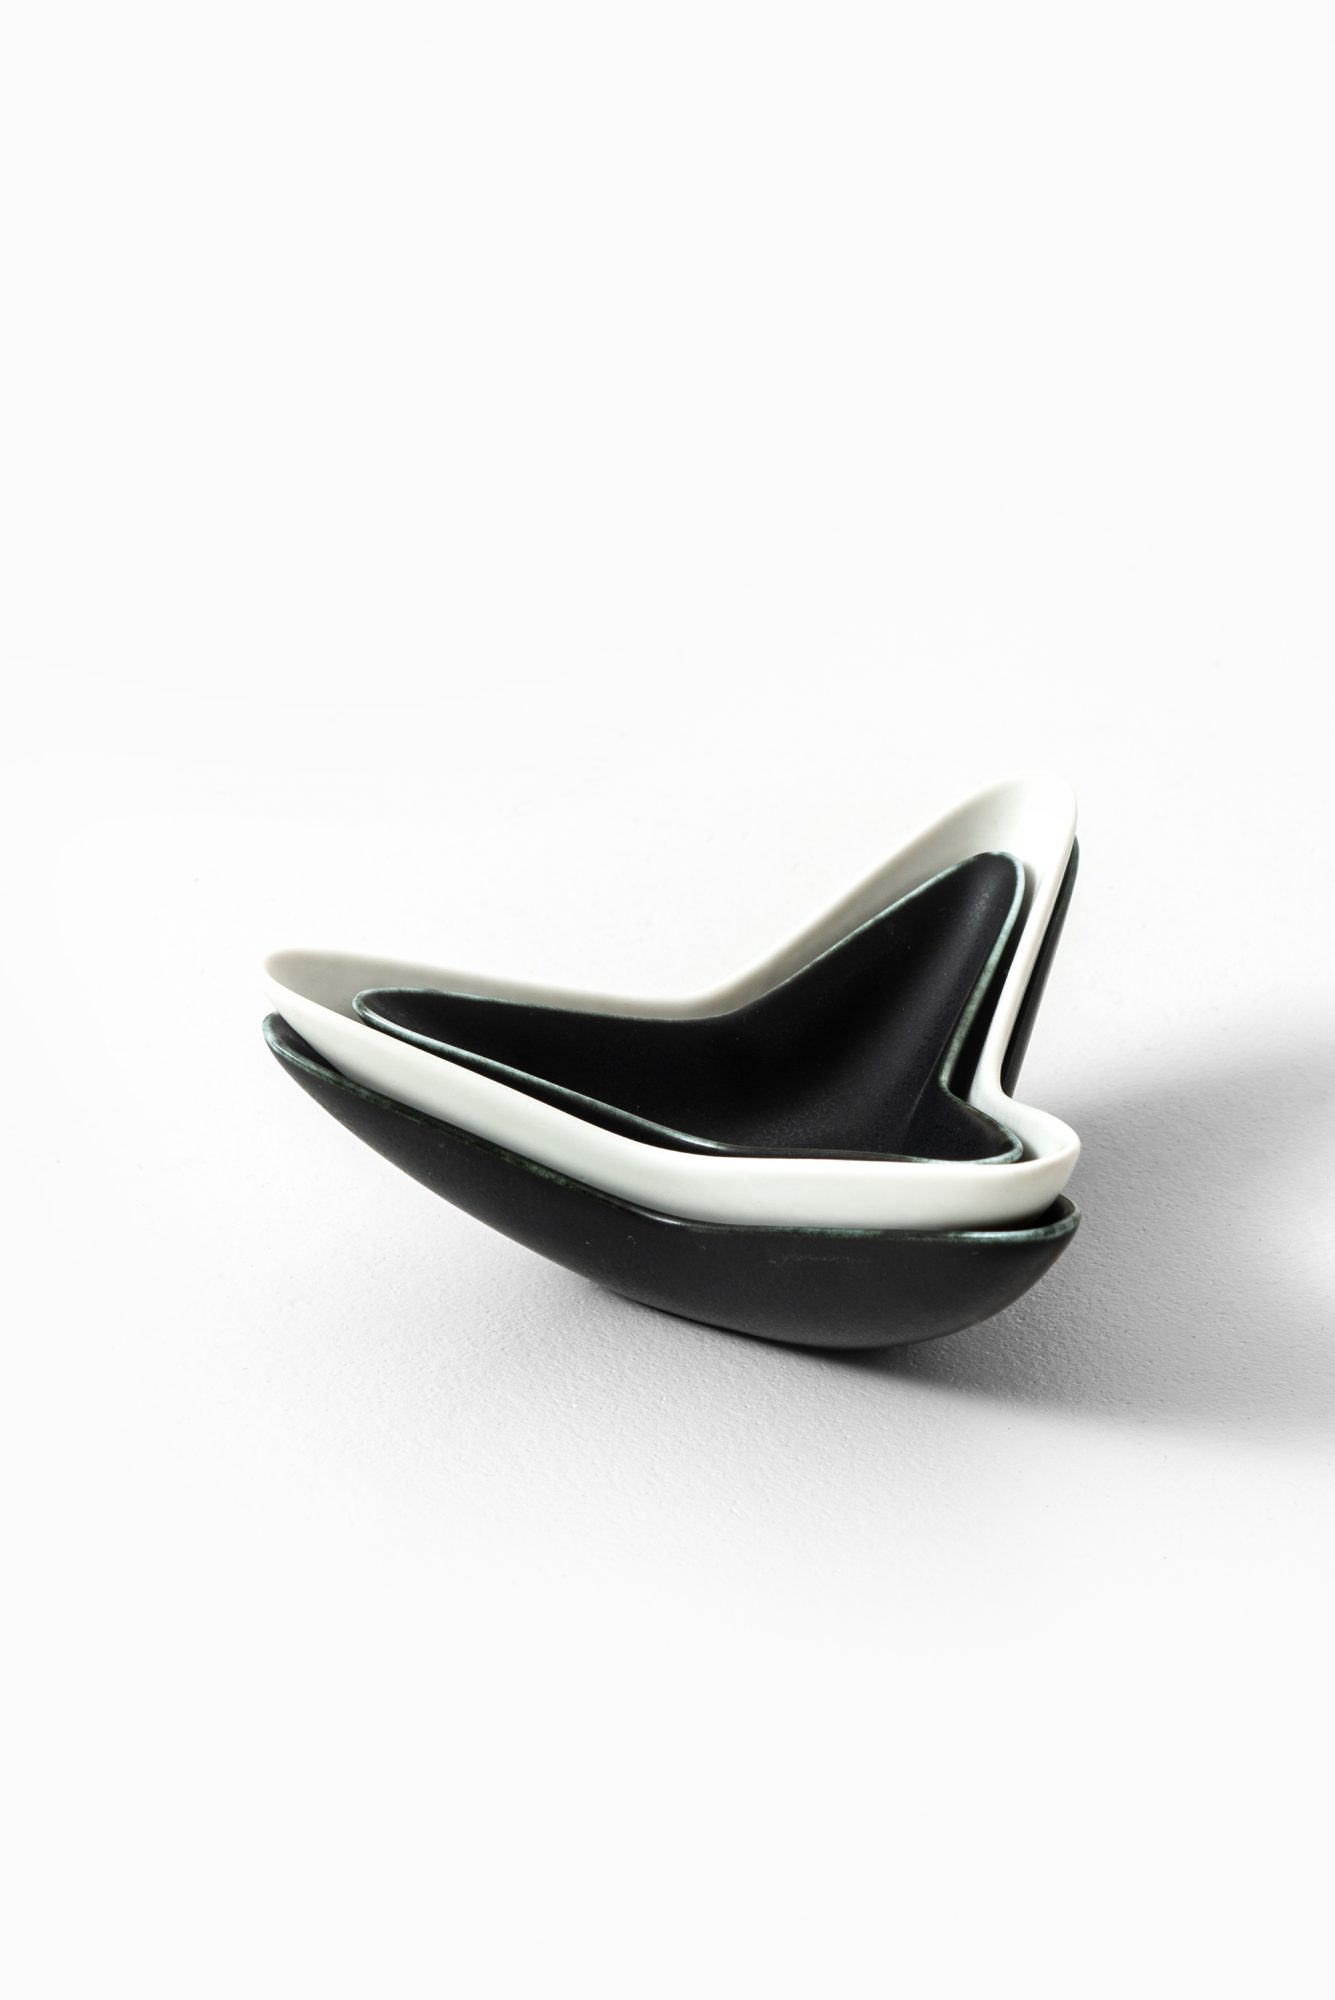 Gunnar Nylund Caolina ceramic bowls at Studio Schalling